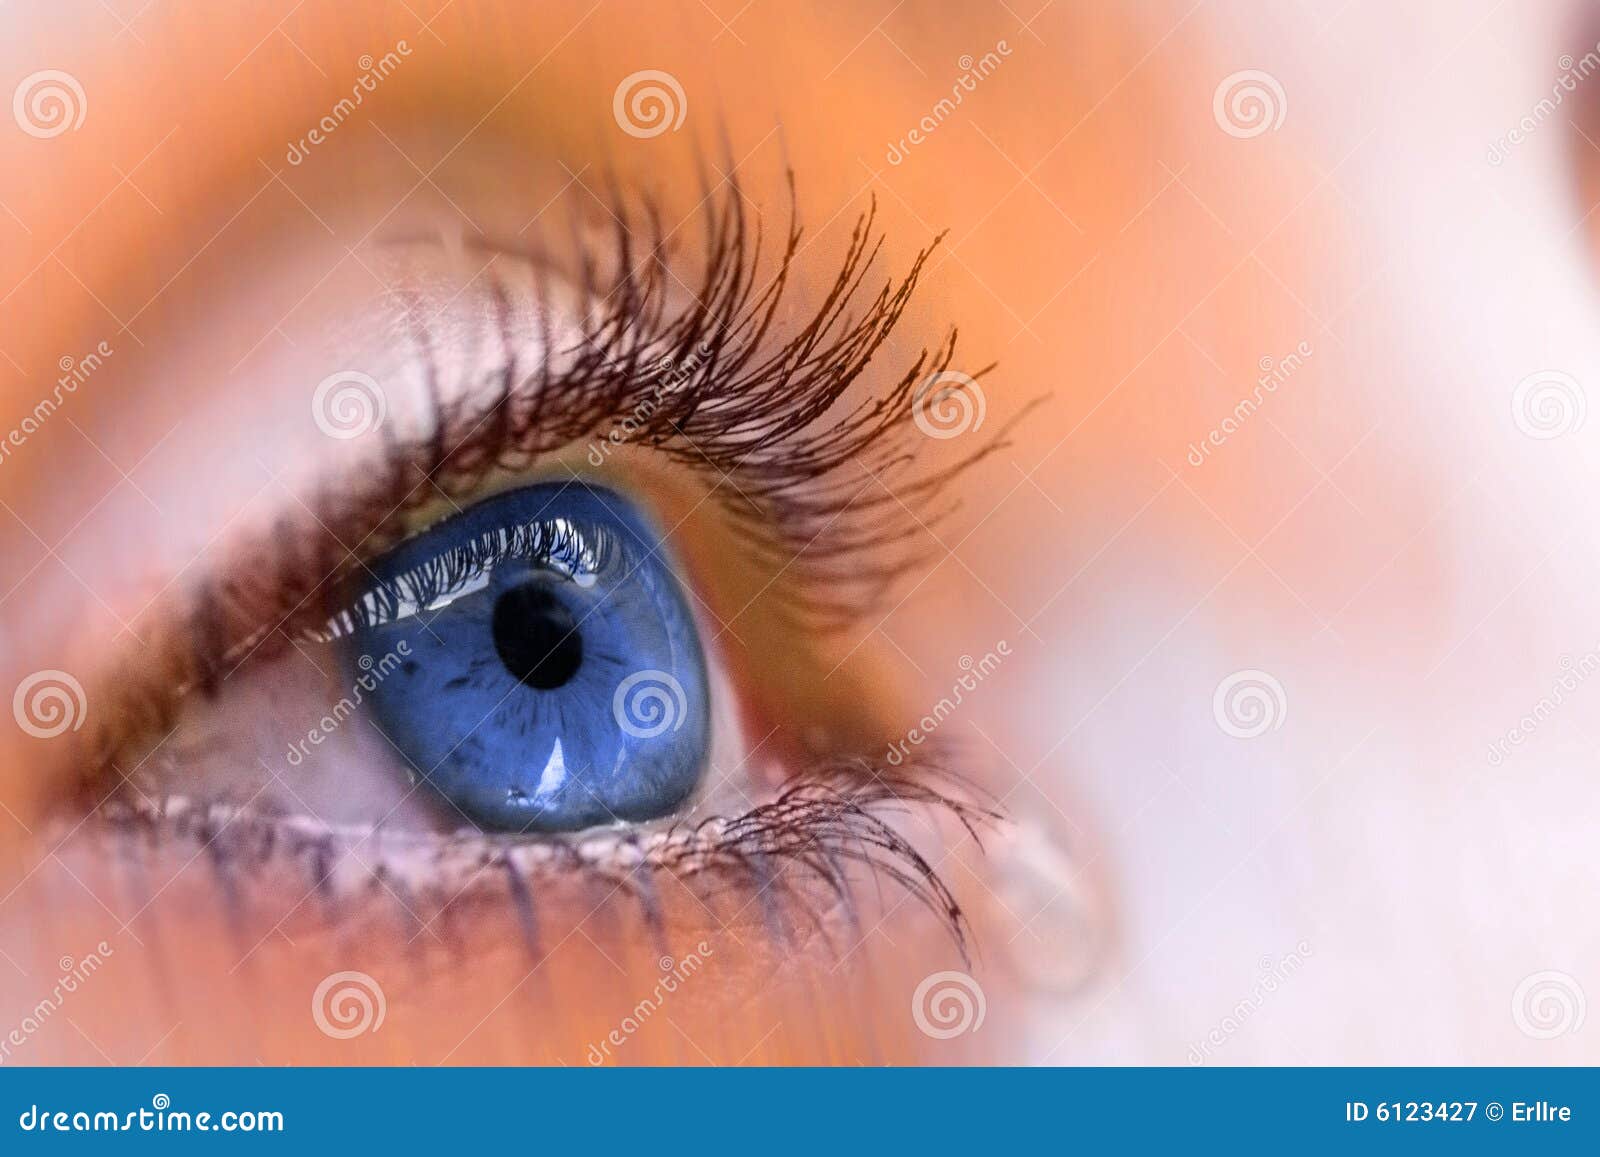 Blue eye stock image. Image of look, pupils, looking, hair - 6123427